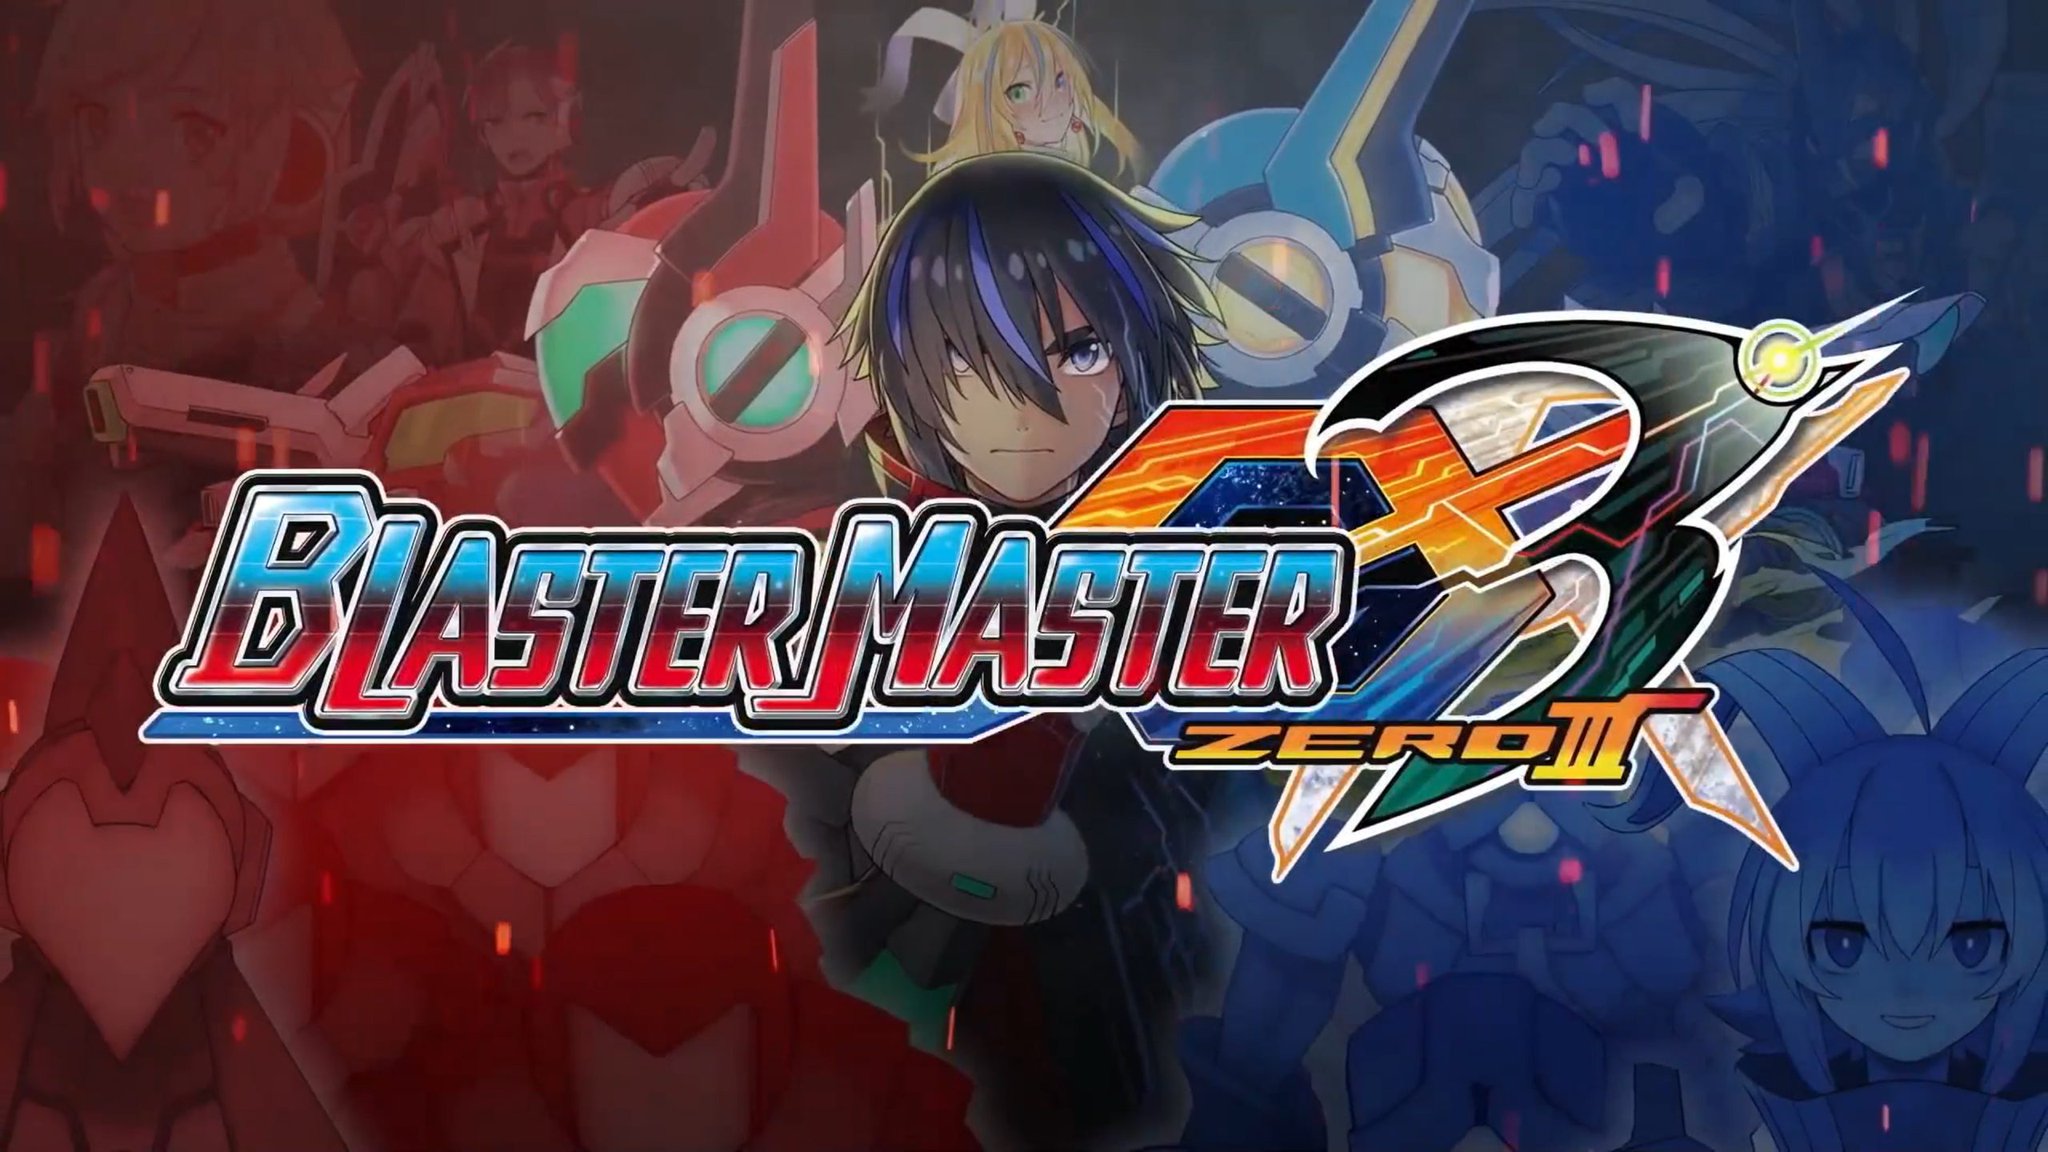 Blaster Master Zero 3 Announced